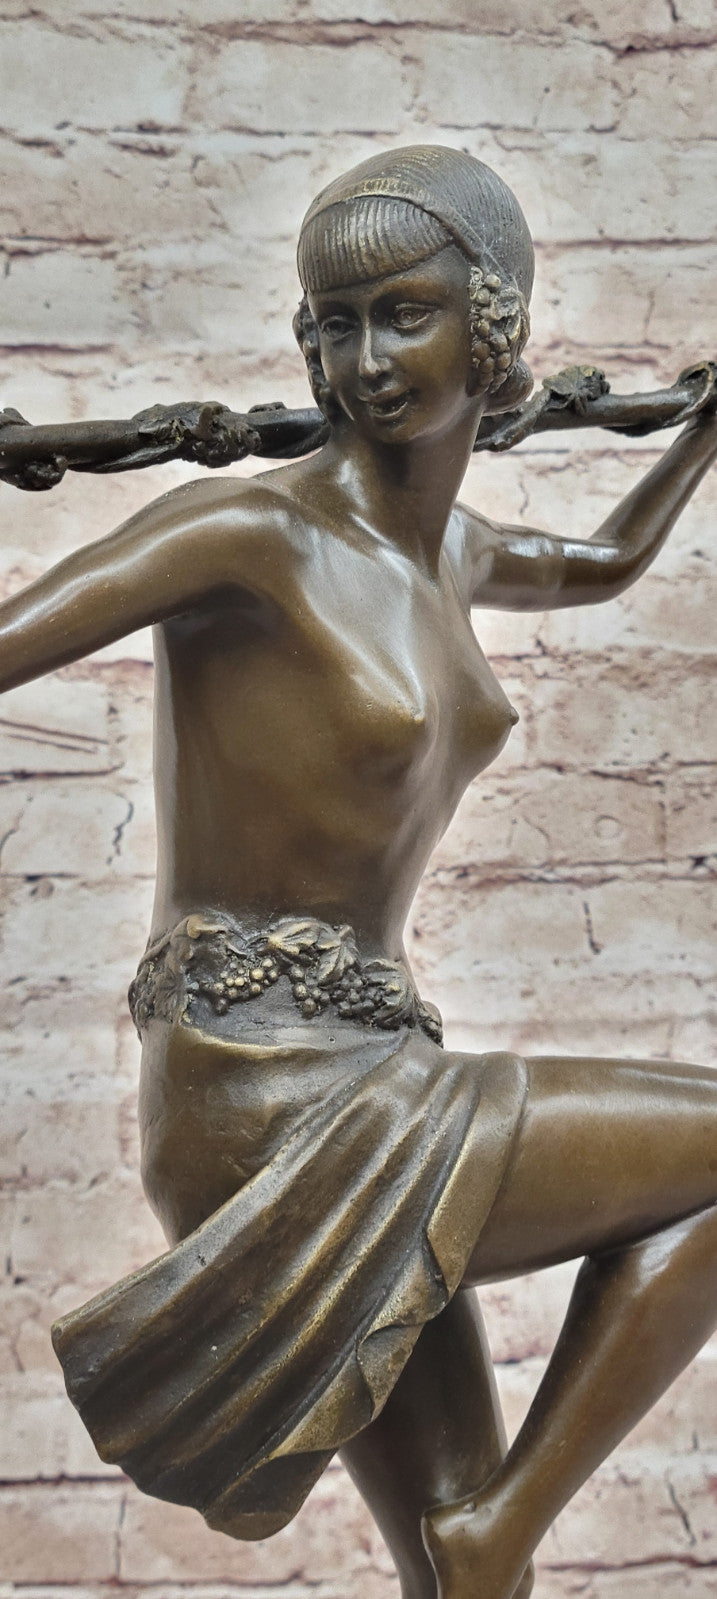 Fine Art Hand Made Statue - Pierre Le Faguays "Dancer of Thyrsus" Bronze Sculpture